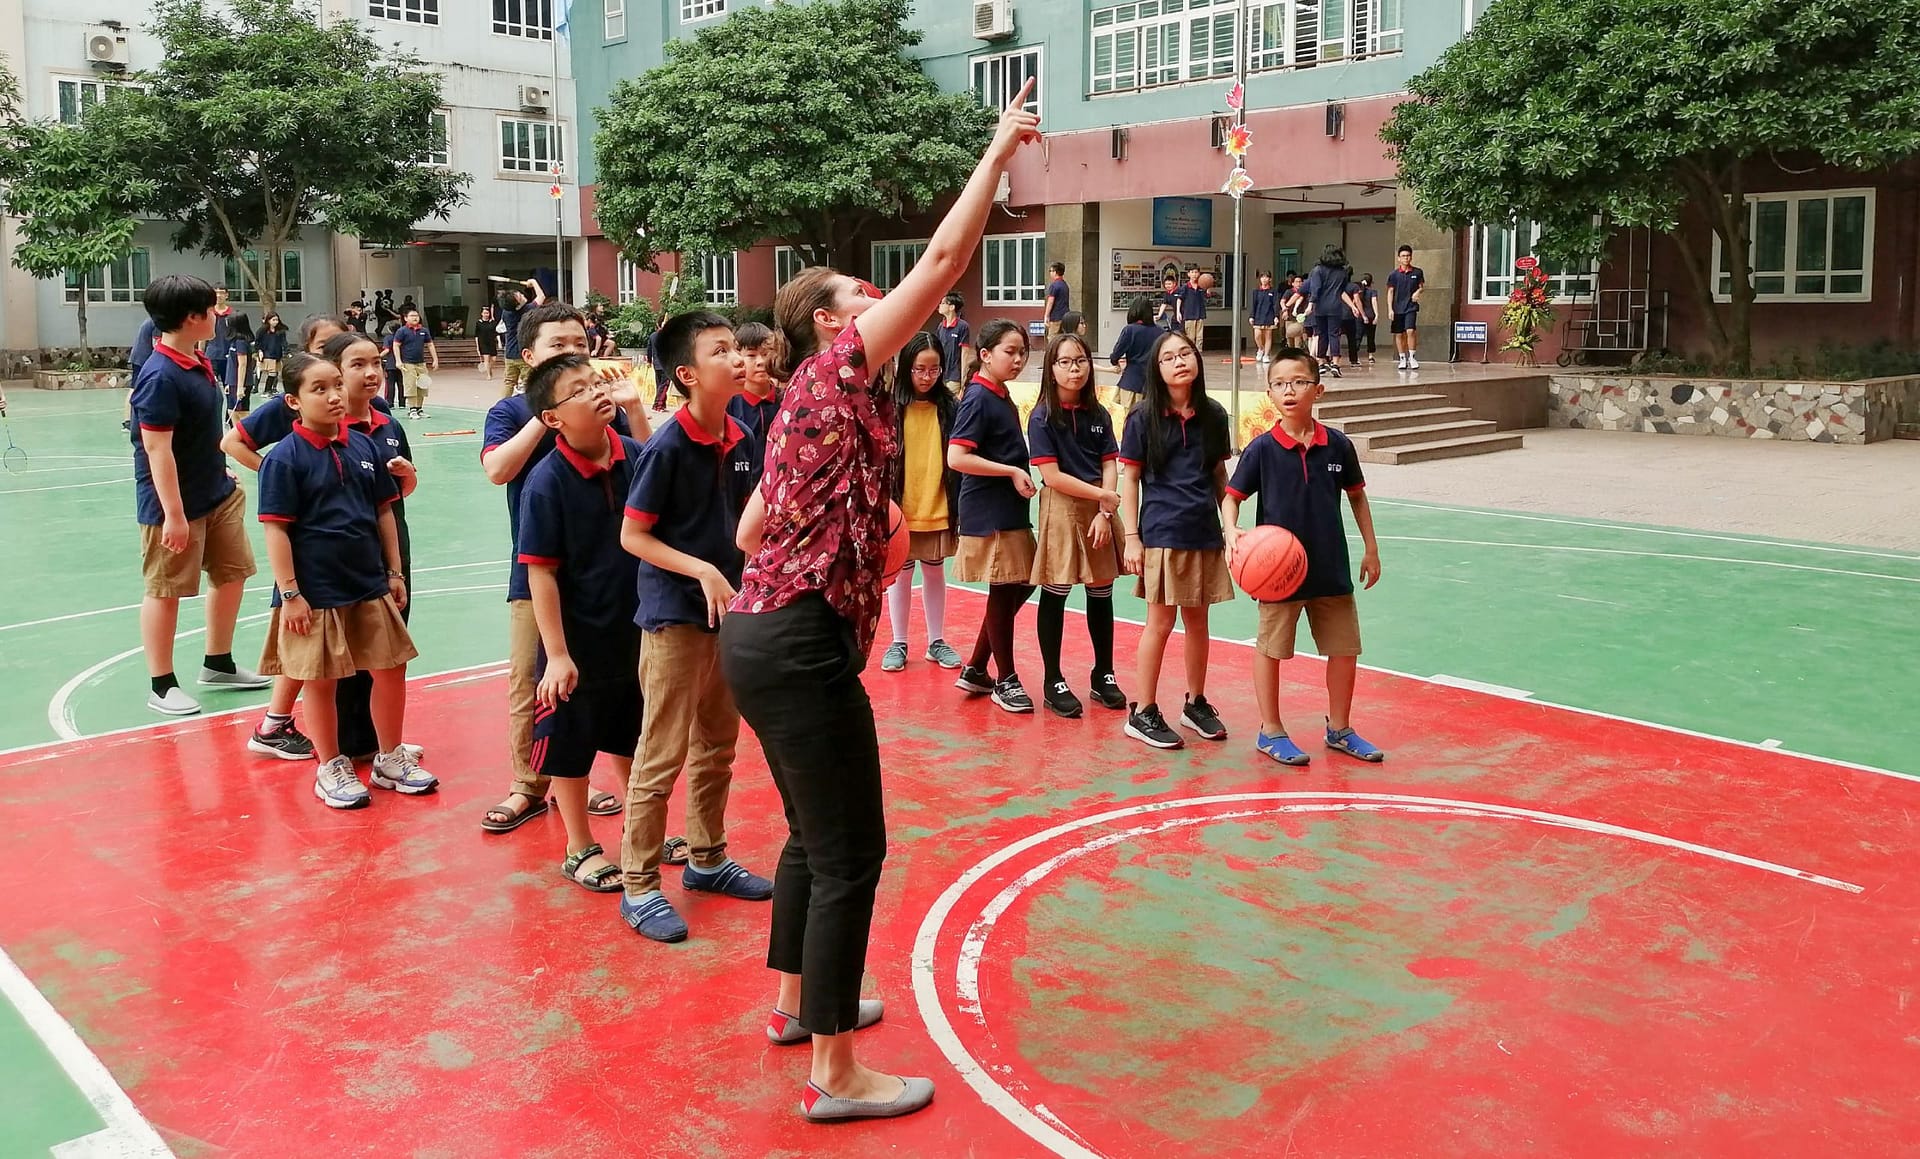 A teacher shows a class how to play basketball